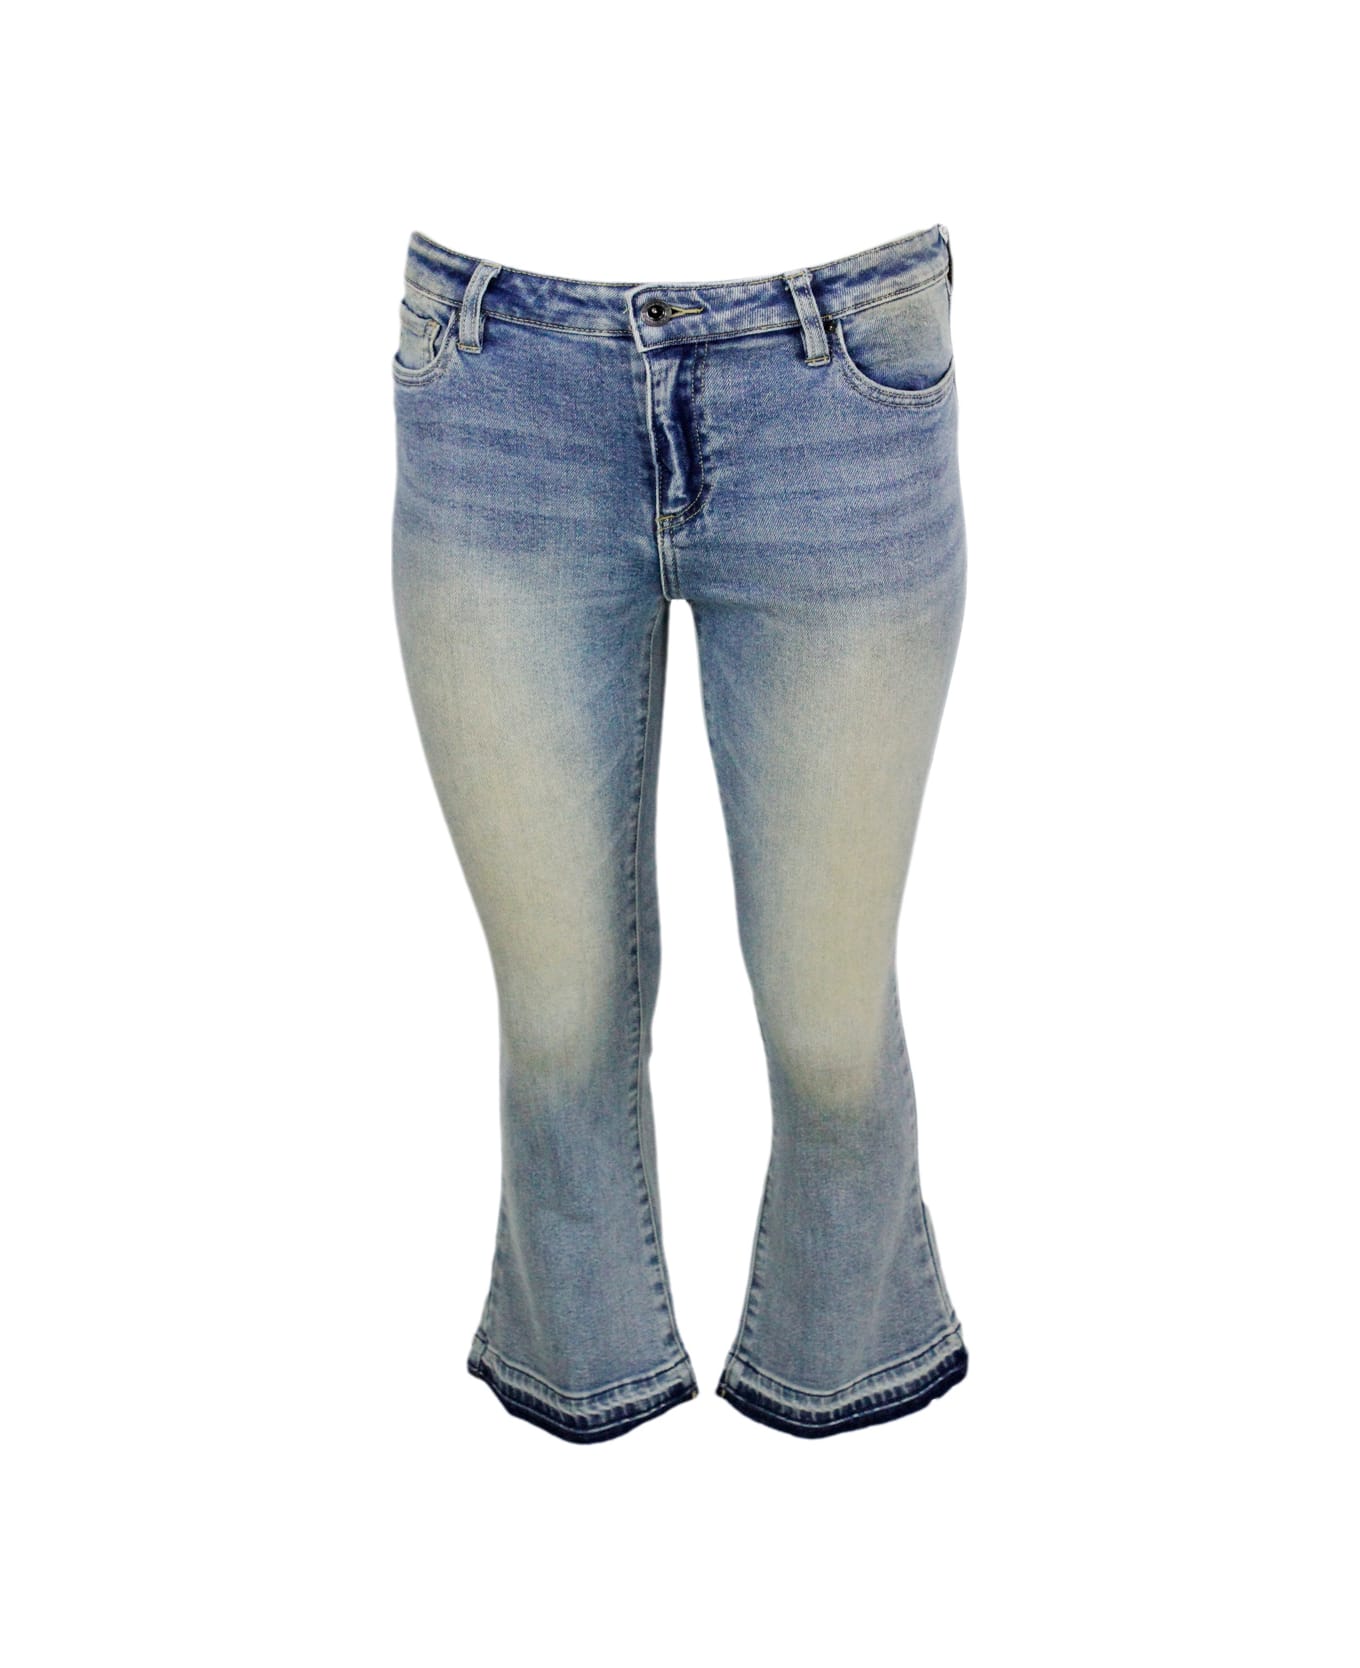 Armani Collezioni Stretch Jeans In Vintage Effect Denim Flare Capri Model With Fringed Trumpet Bottom. - Denim ボトムス